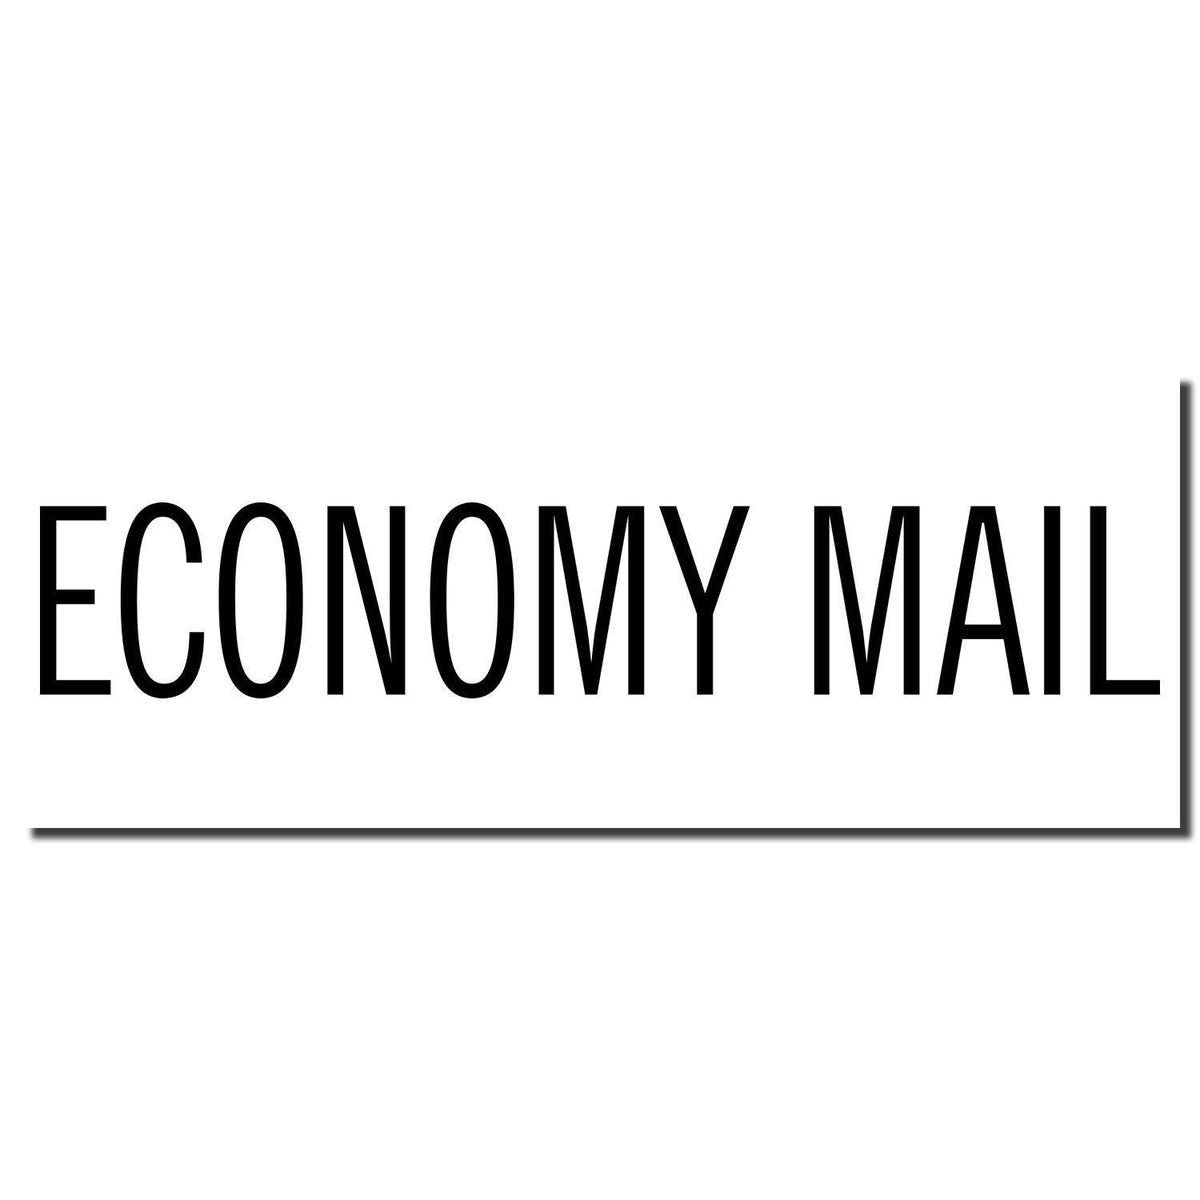 Enlarged Imprint Large Economy Mail Rubber Stamp Sample